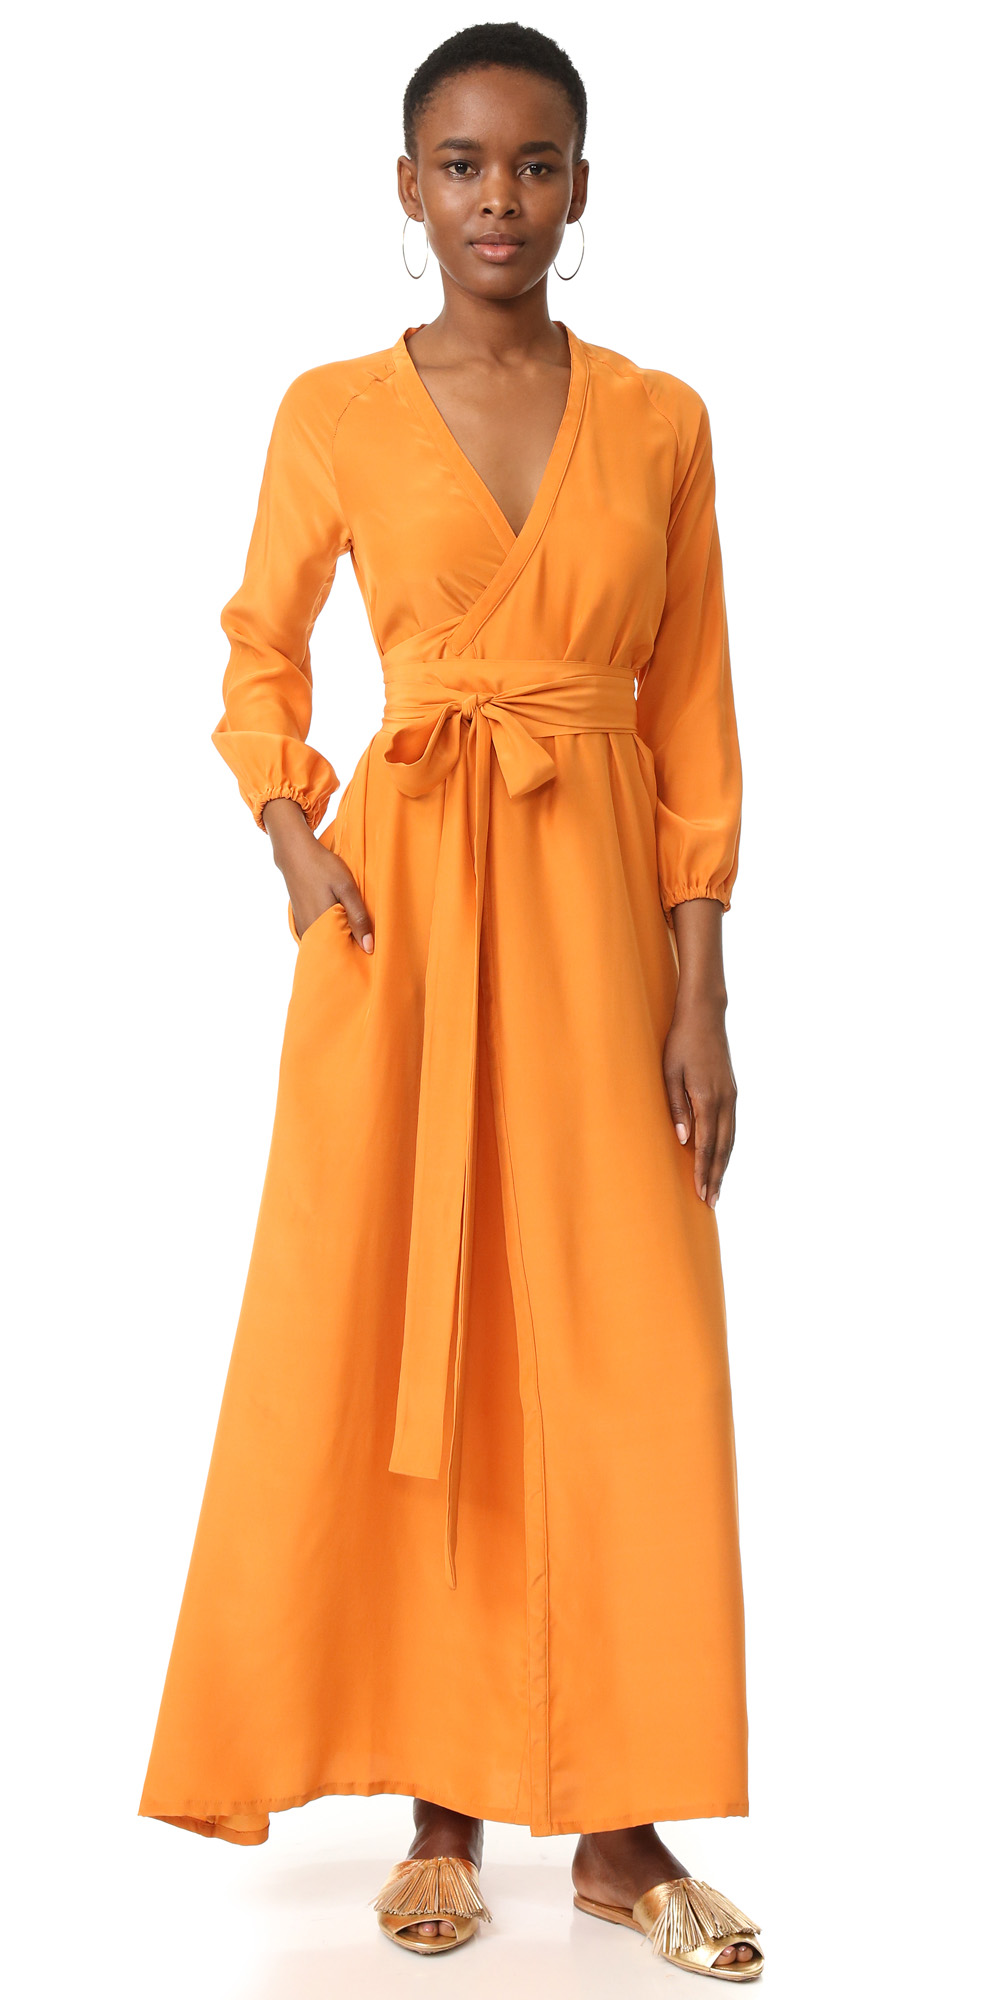 Orange wrap dresses | HOWTOWEAR Fashion